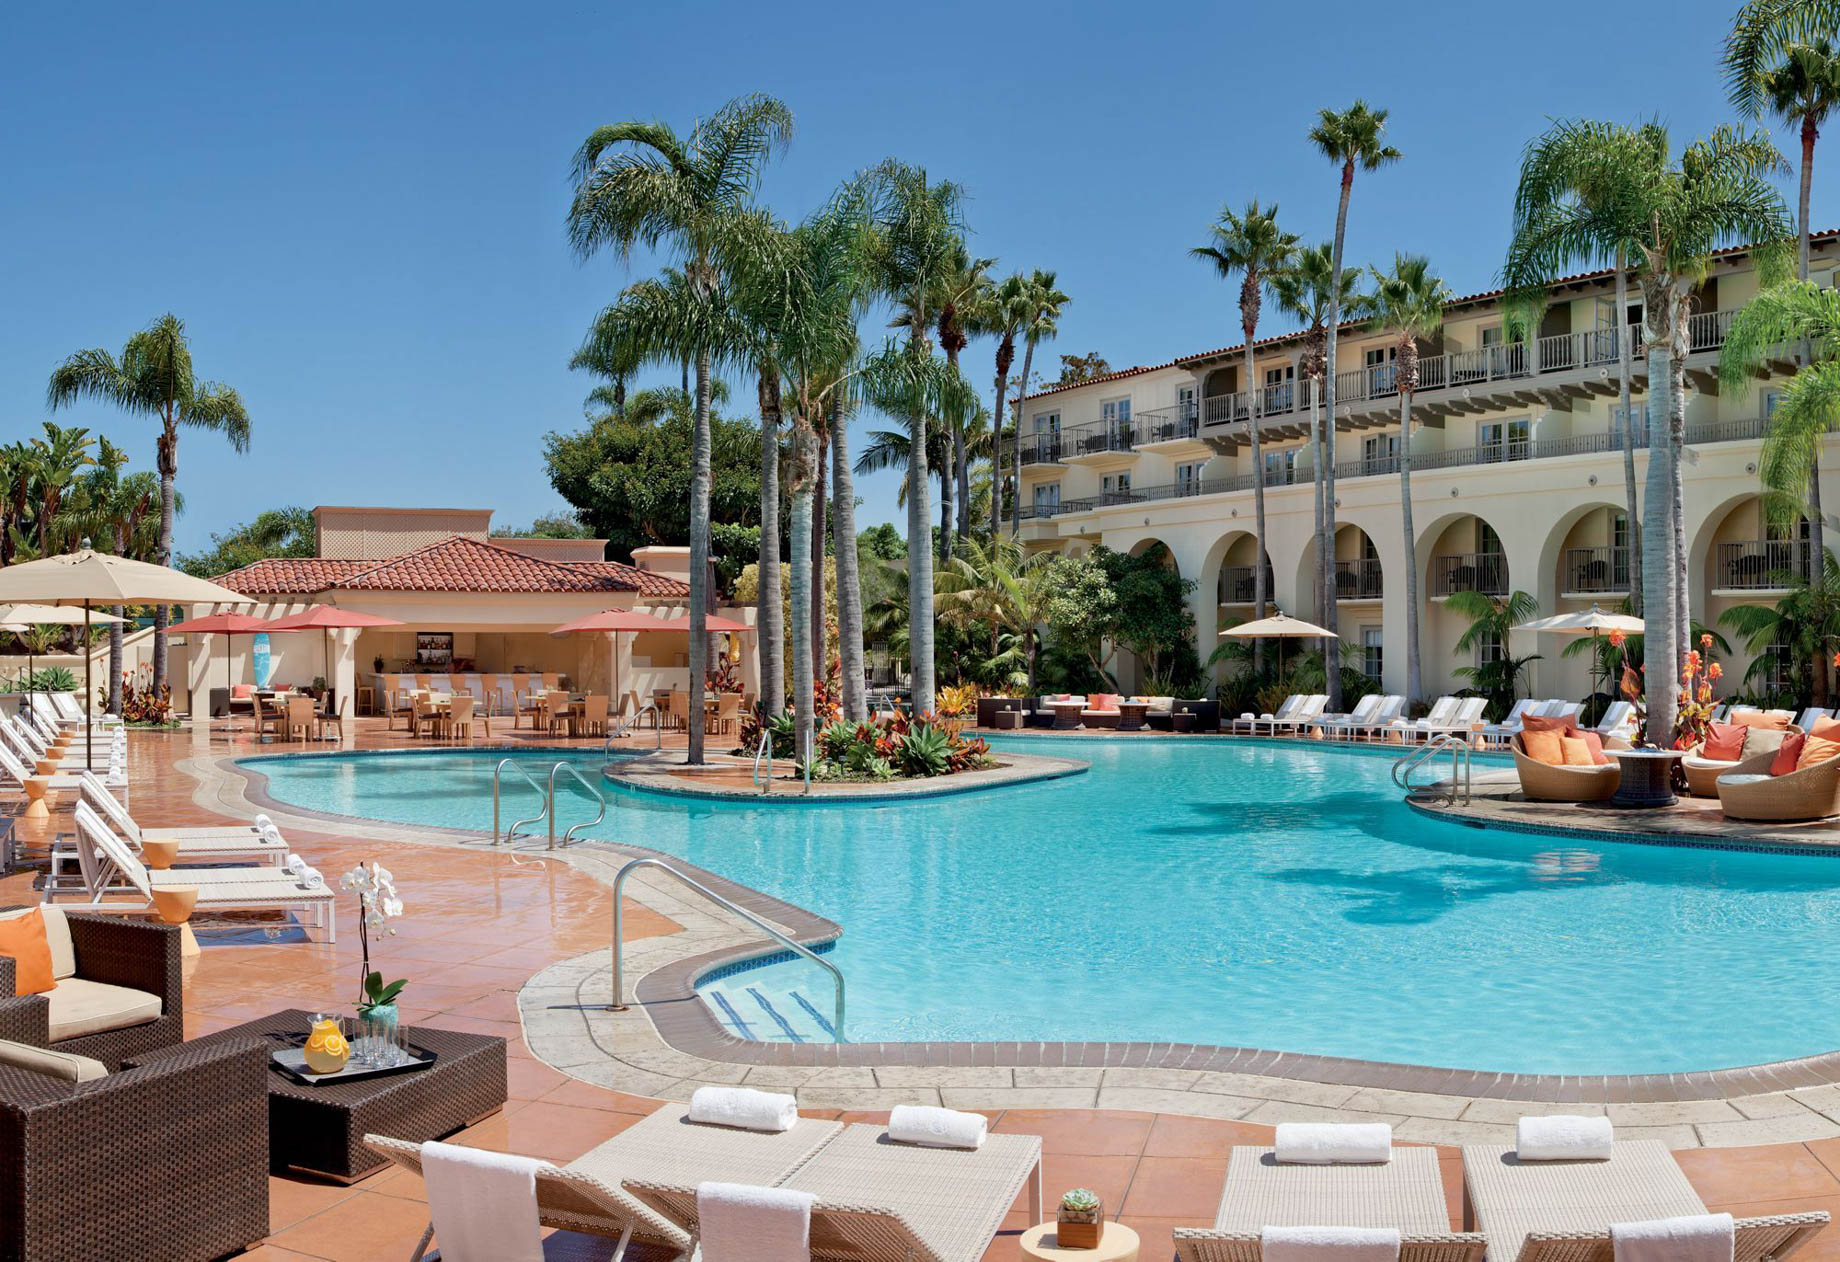 The Ritz-Carlton, Laguna Niguel Resort – Dana Point, CA, USA – The Dana Pool Cafe